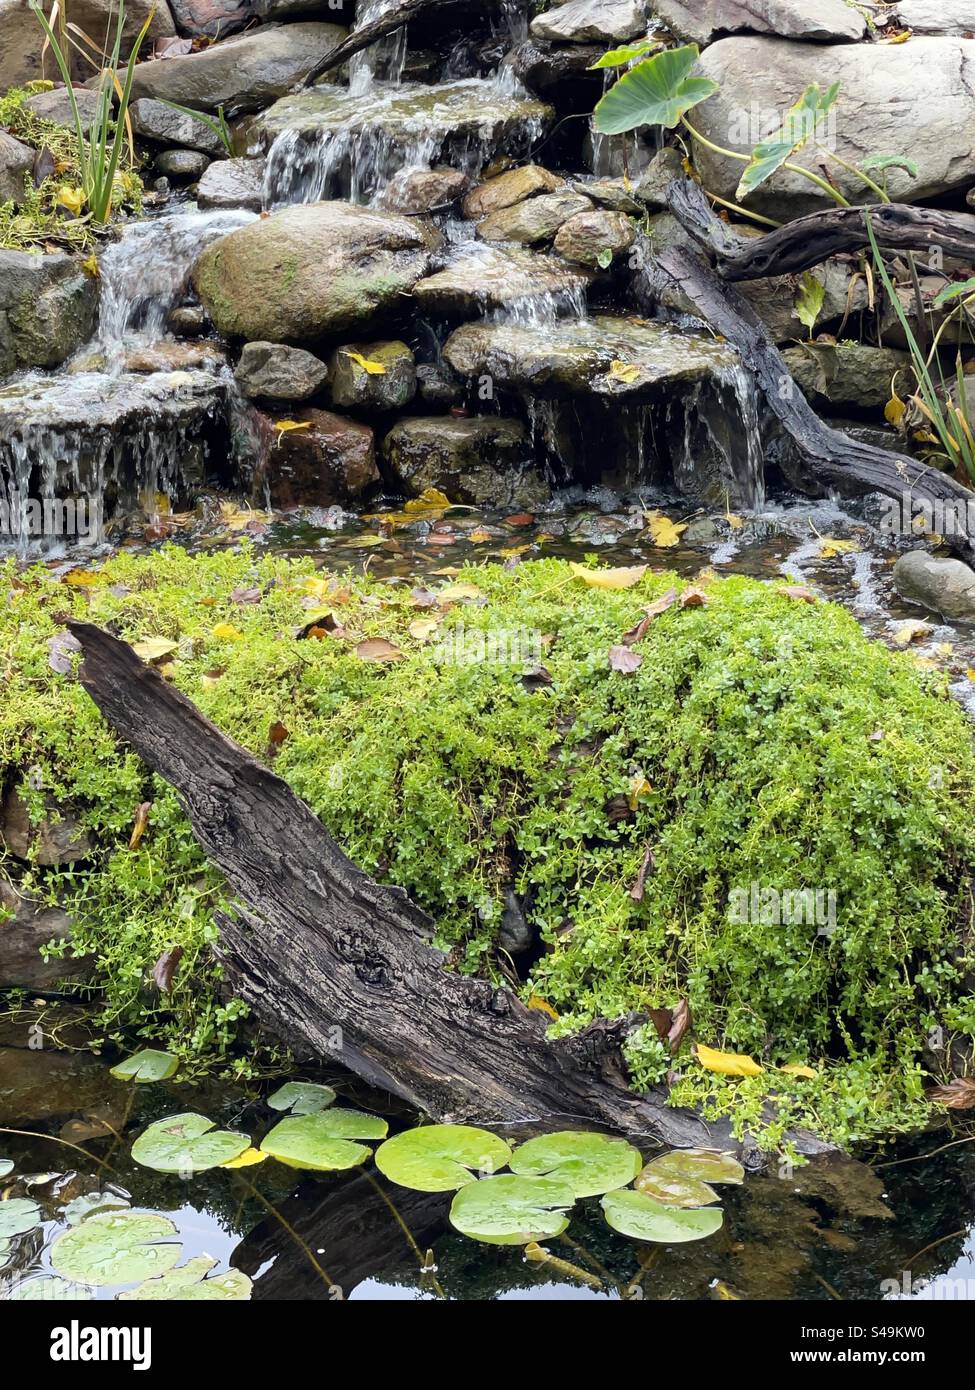 Koi pond, waterfall, driftwood, water lilies Stock Photo